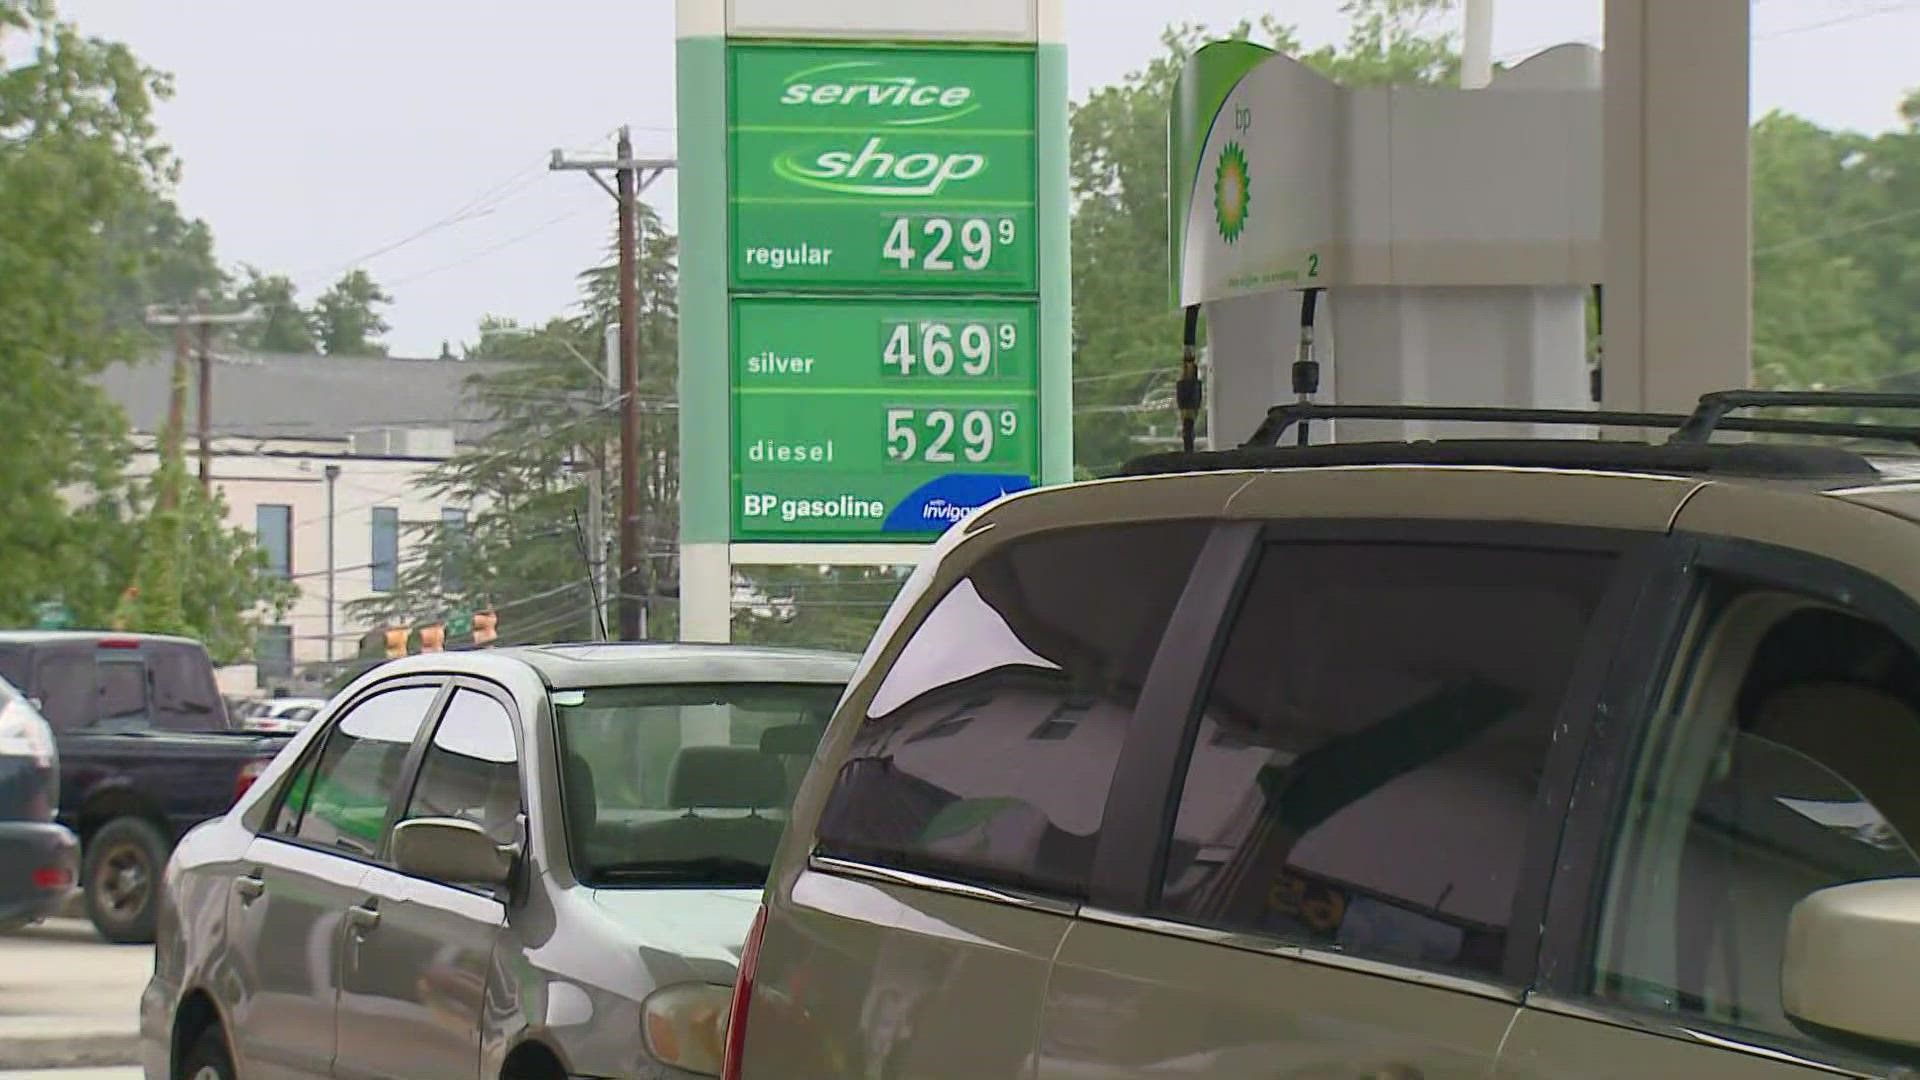 The average price for gas in North Carolina is $4.20 a gallon.